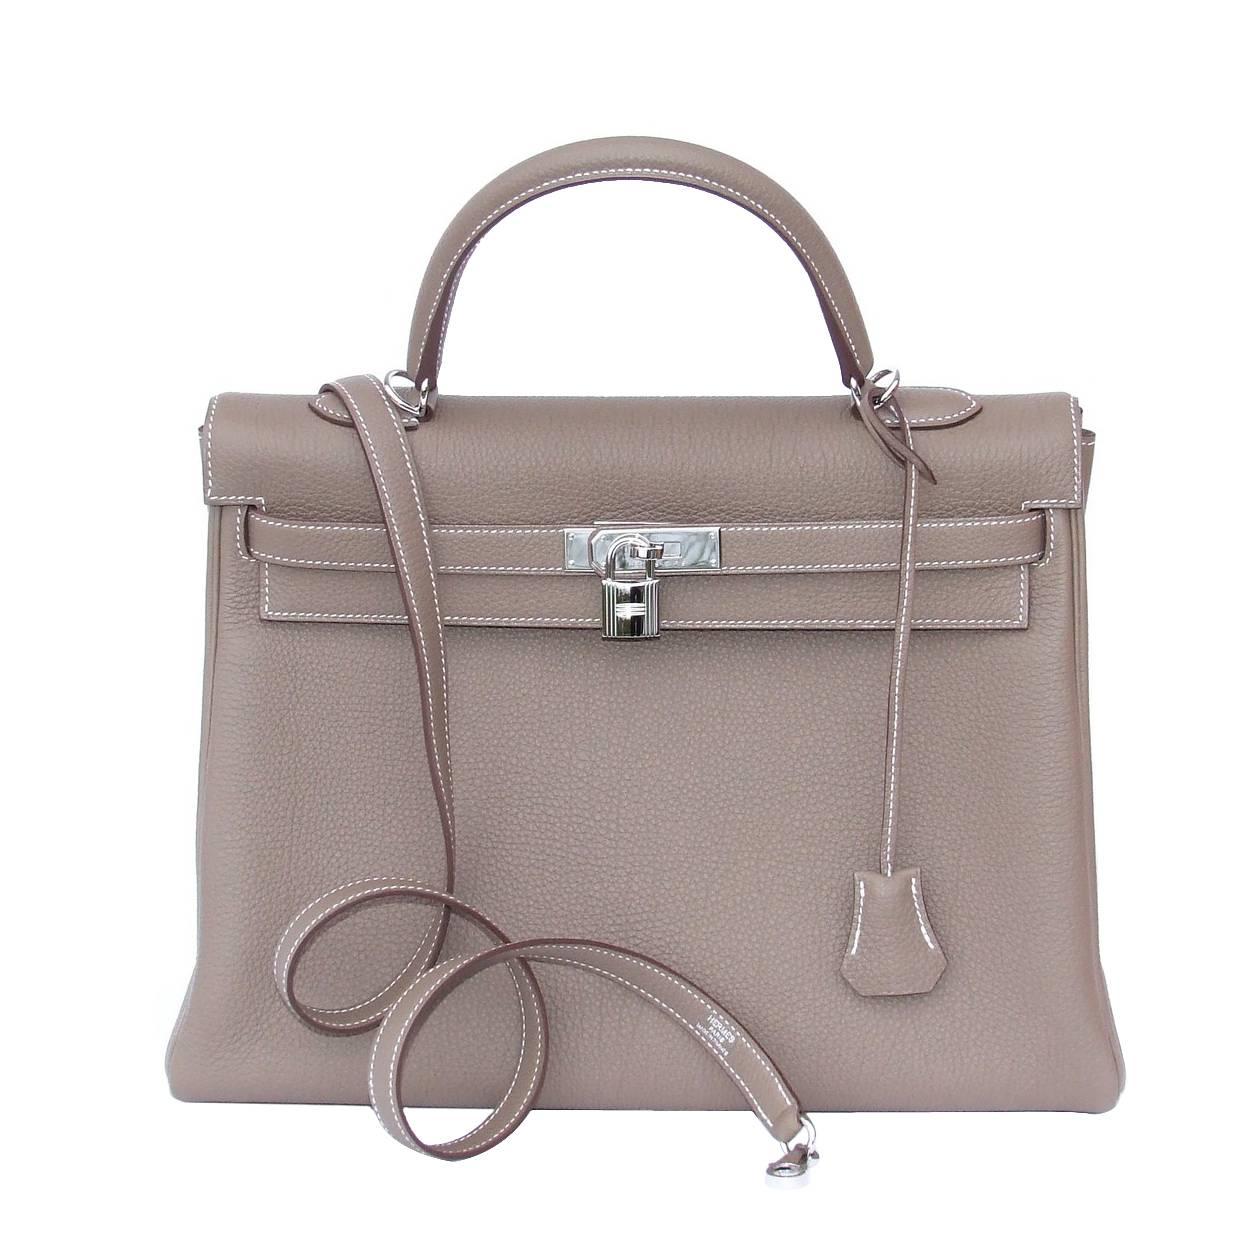 Authentic Hermes Kelly 35 Handbag Etoupe Togo Silver Hdw Full Set